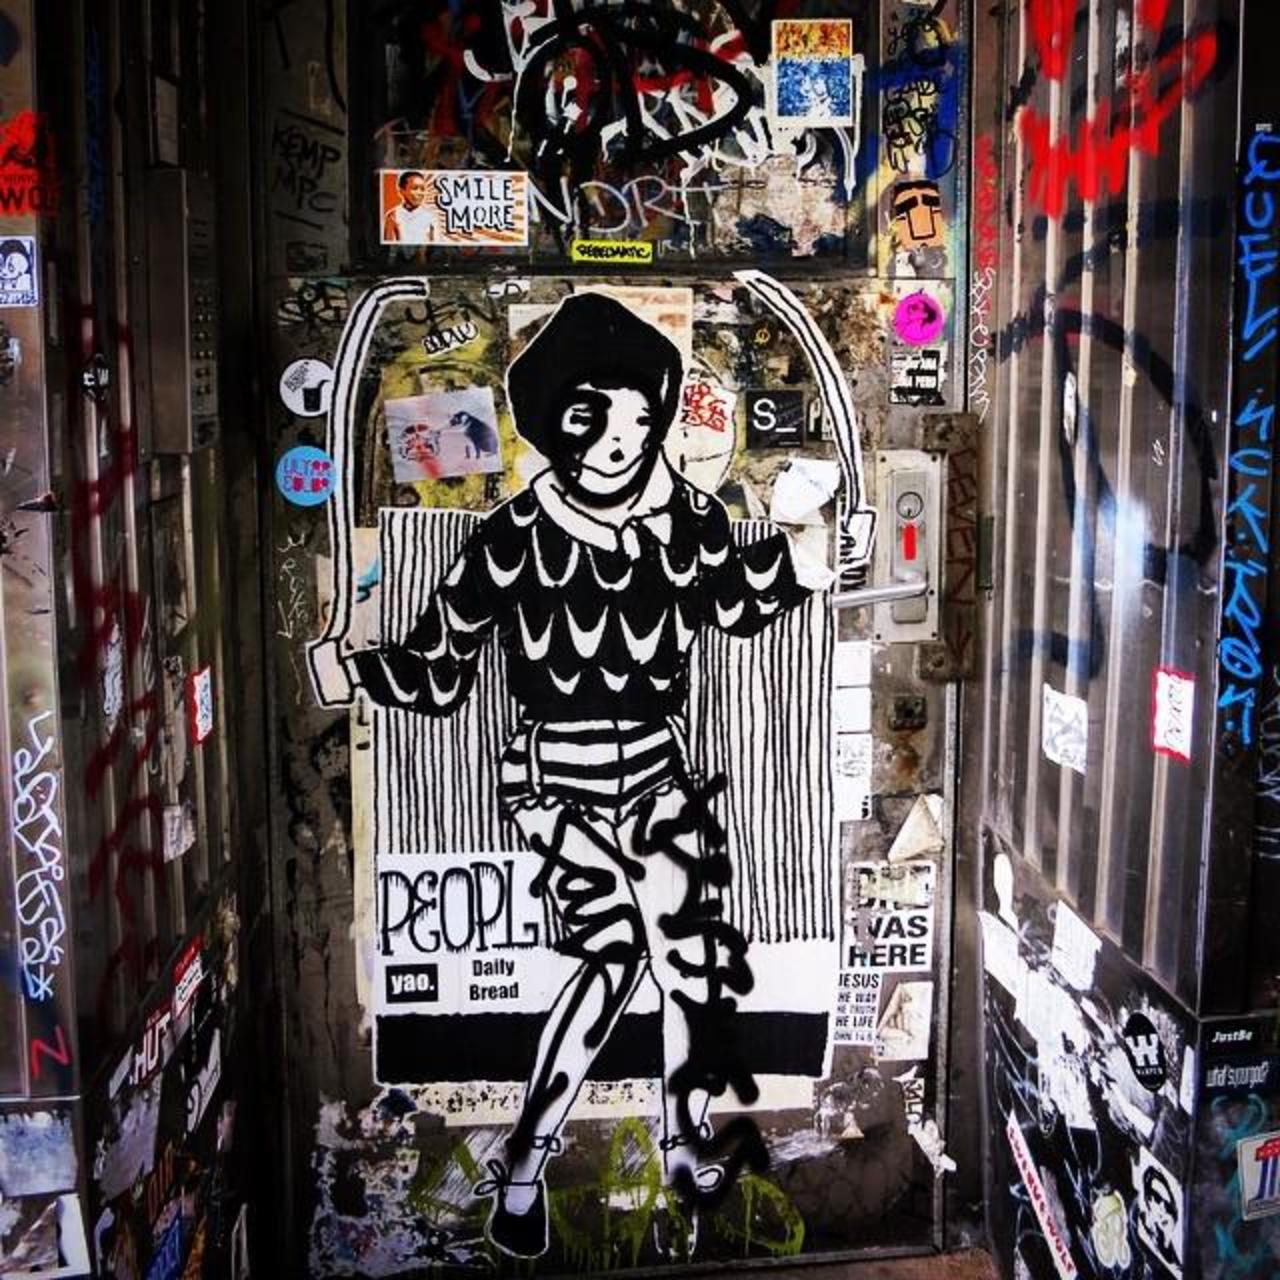 RT @CM_Fragrance: Harlequin #streetart #graffiti #pasteups #wheatpaste #stickers #slaps #tags #nyc #roseshards http://bit.ly/1wl8Zgu http://t.co/UijyTY8fCW